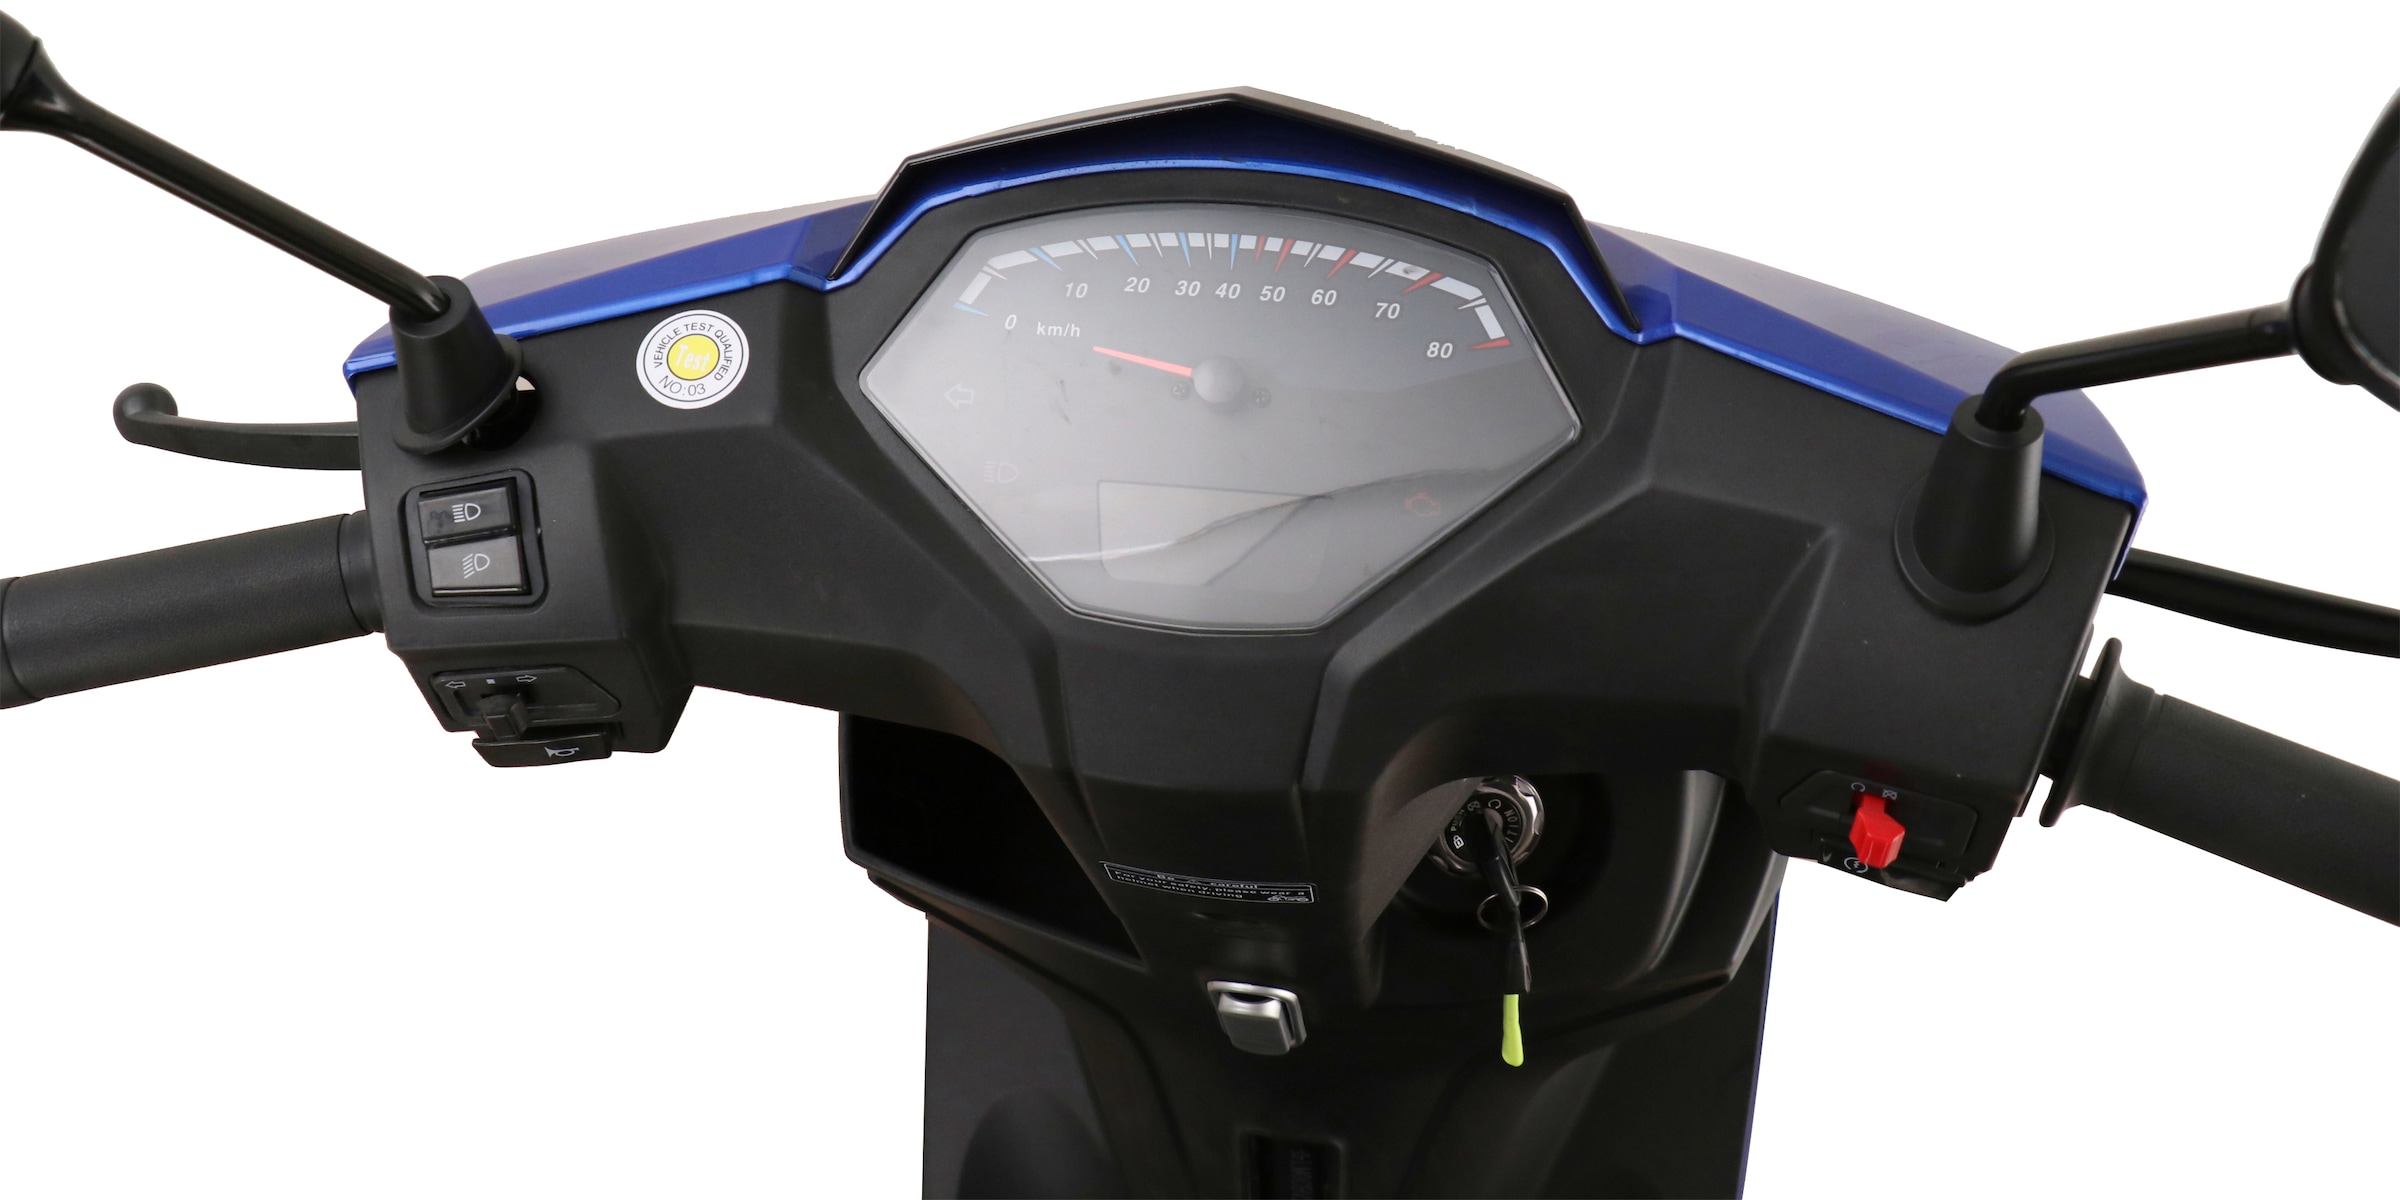 Motorroller »Sonic ( tlg., PS, km/h, cm³, online 2 50-45«, Euro inkl. Topcase), 5, mit Komplett-Set, Topcase GT 3 45 X 50 kaufen UNION